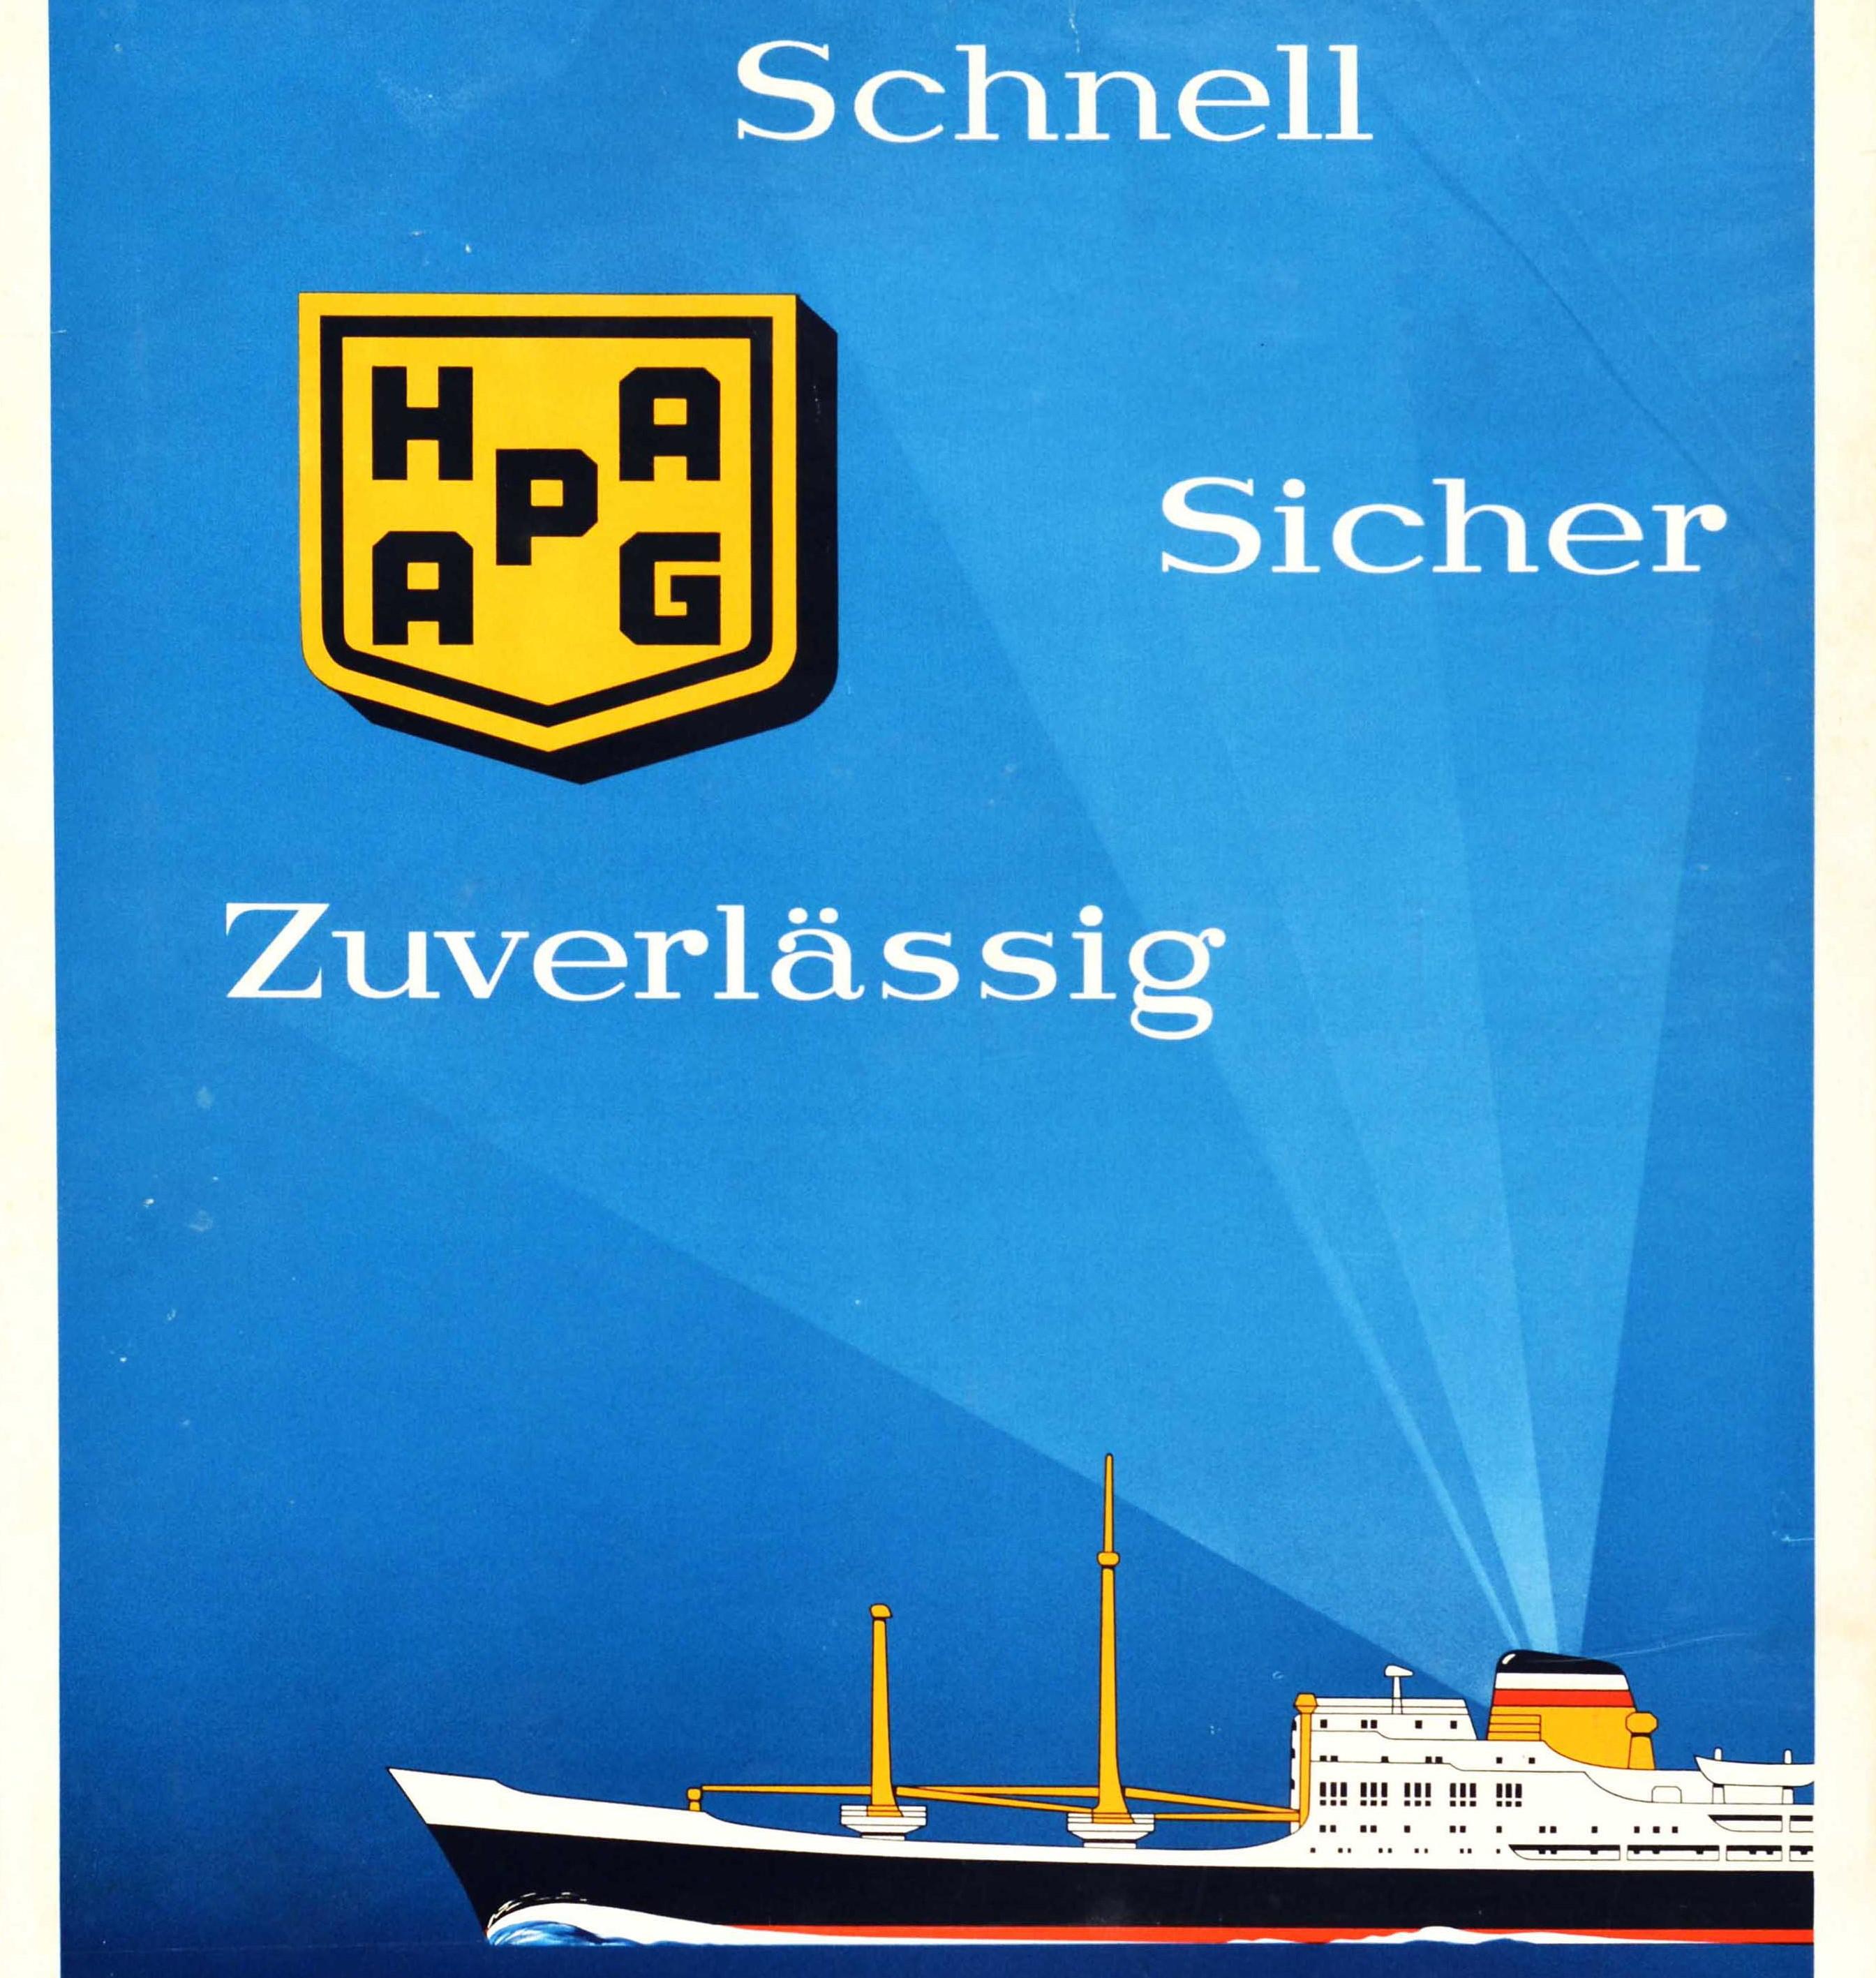 Original Vintage Travel Poster Hamburg America Liner Fast Safe Reliable Ship Art - Blue Print by Donath